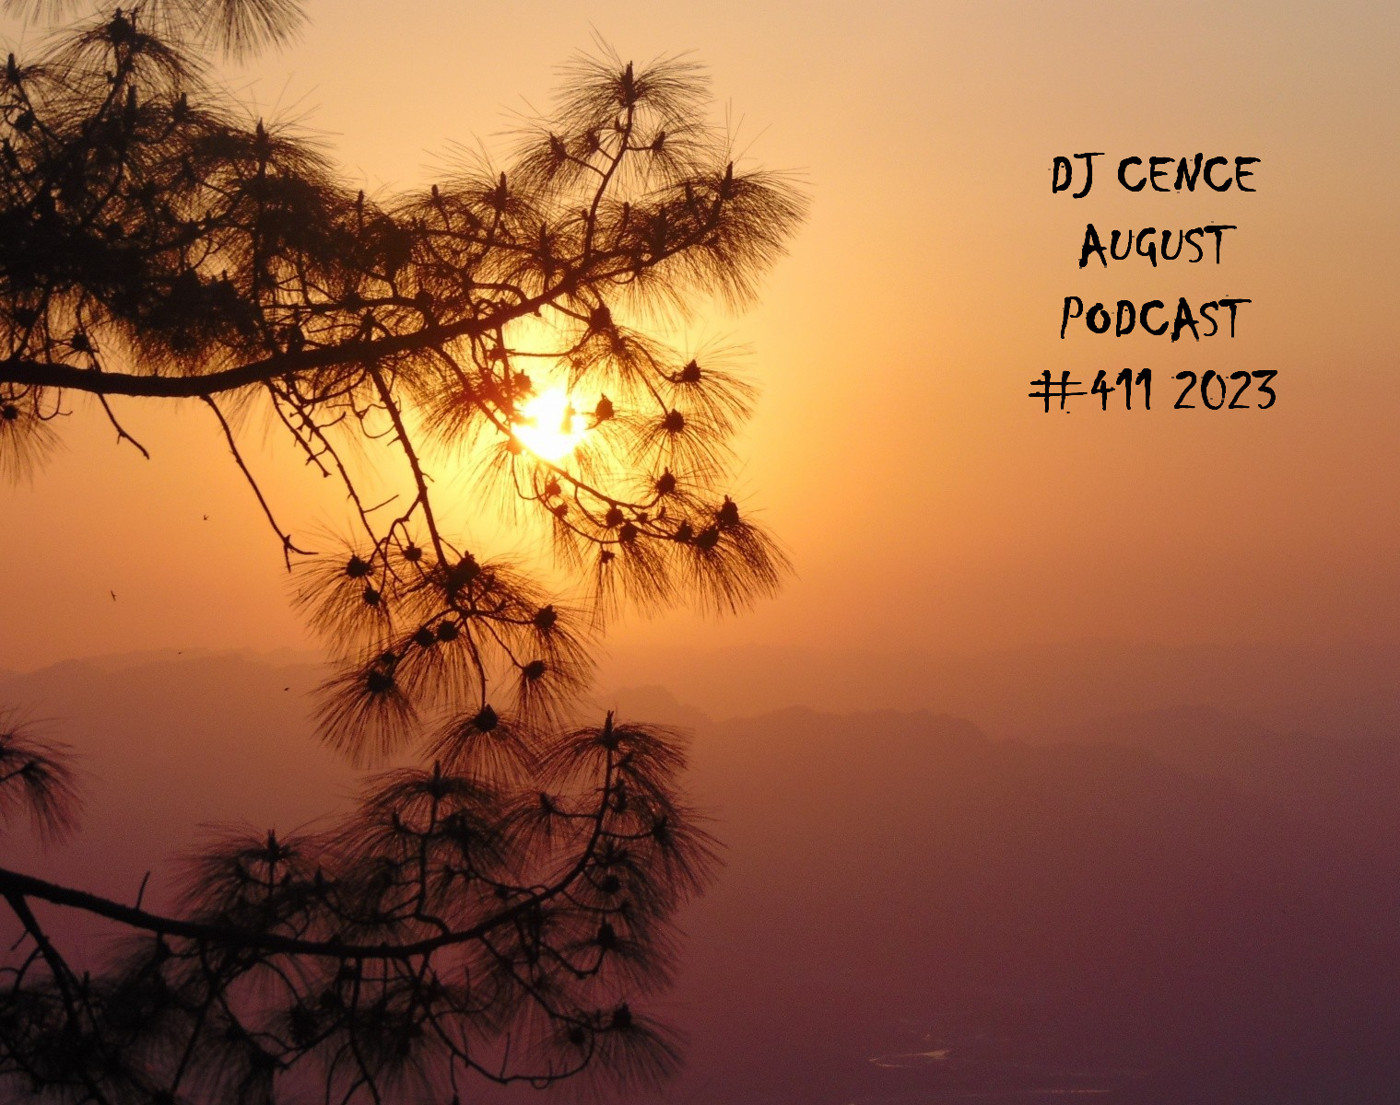 DJ CENCE AUGUST PODCAST #411 #2023